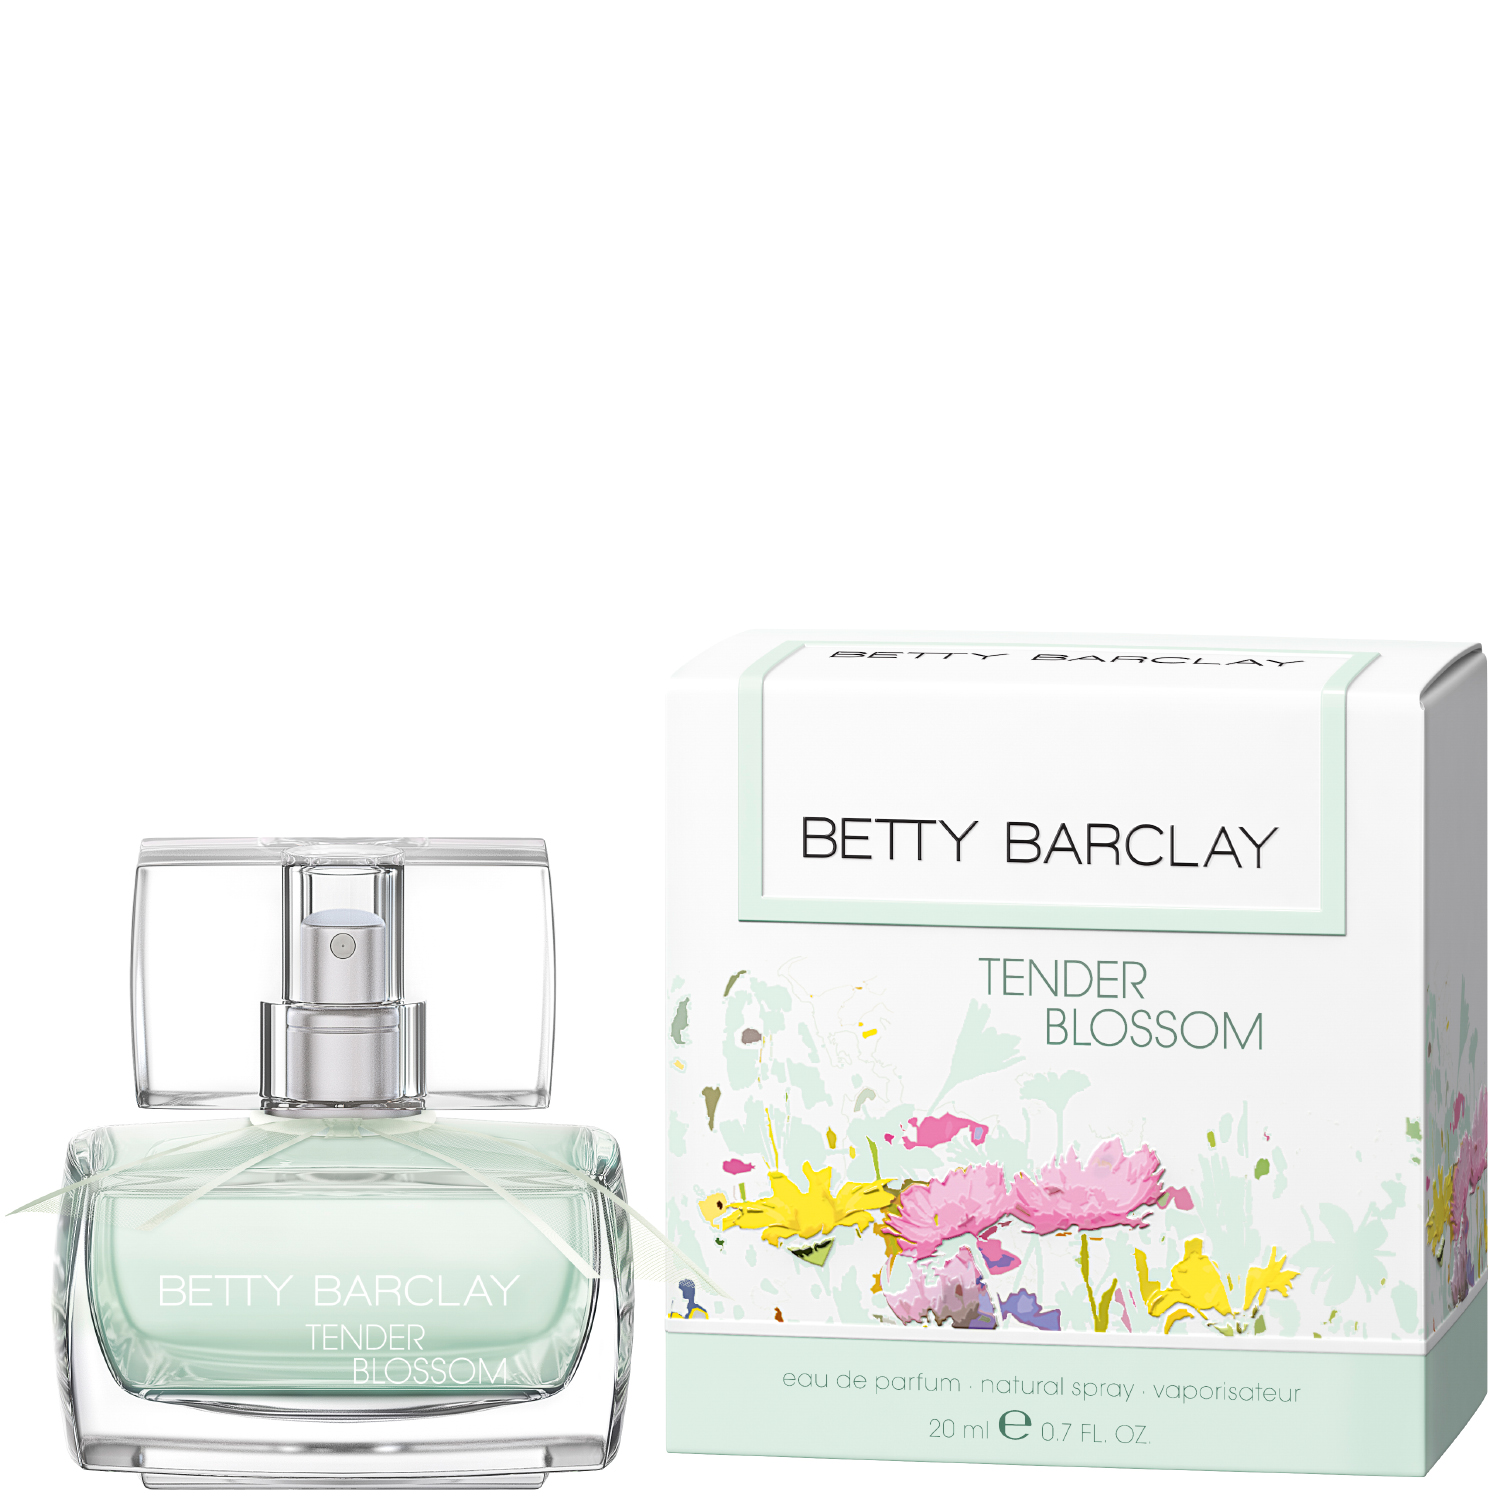 Betty Barclay Tender Blossom Eau de Toilette 20ml